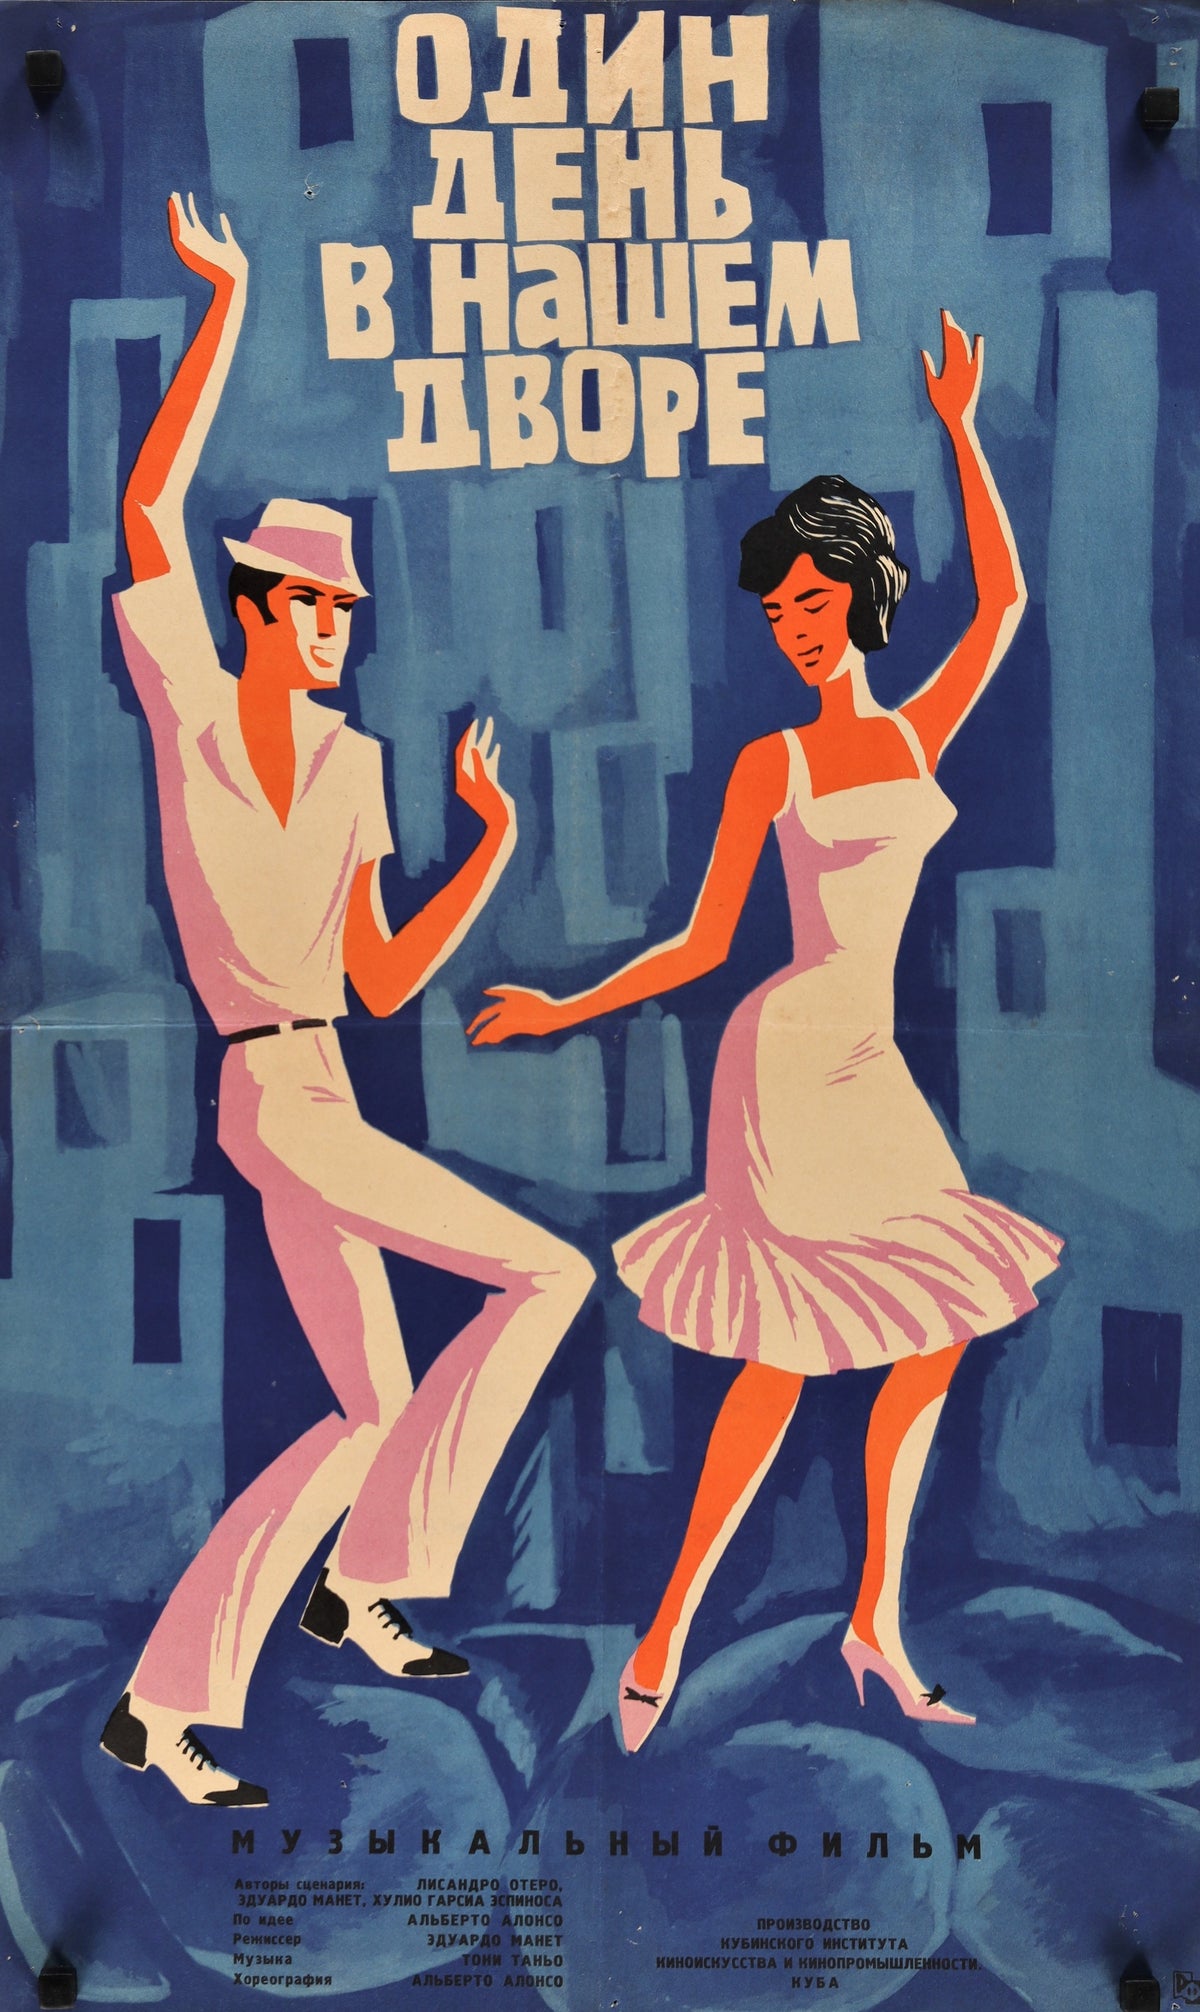 DAY IN A SOLAR Russian 19x31 1966 Un dia en el solar, cool Fedorov artwork of dancing couple - Authentic Vintage Poster